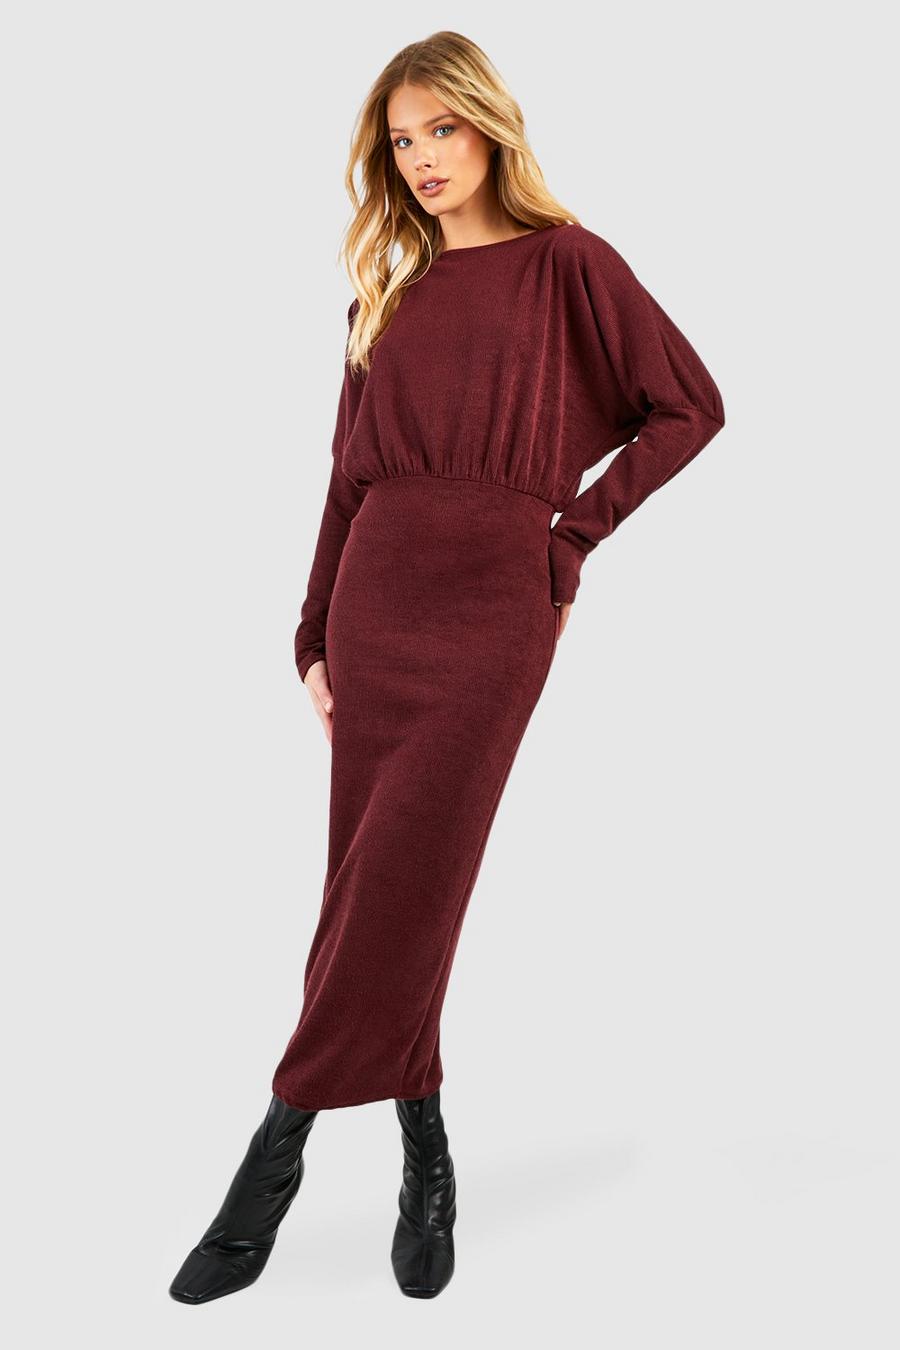 Wine rouge Long Sleeve Knit Midaxi Dress